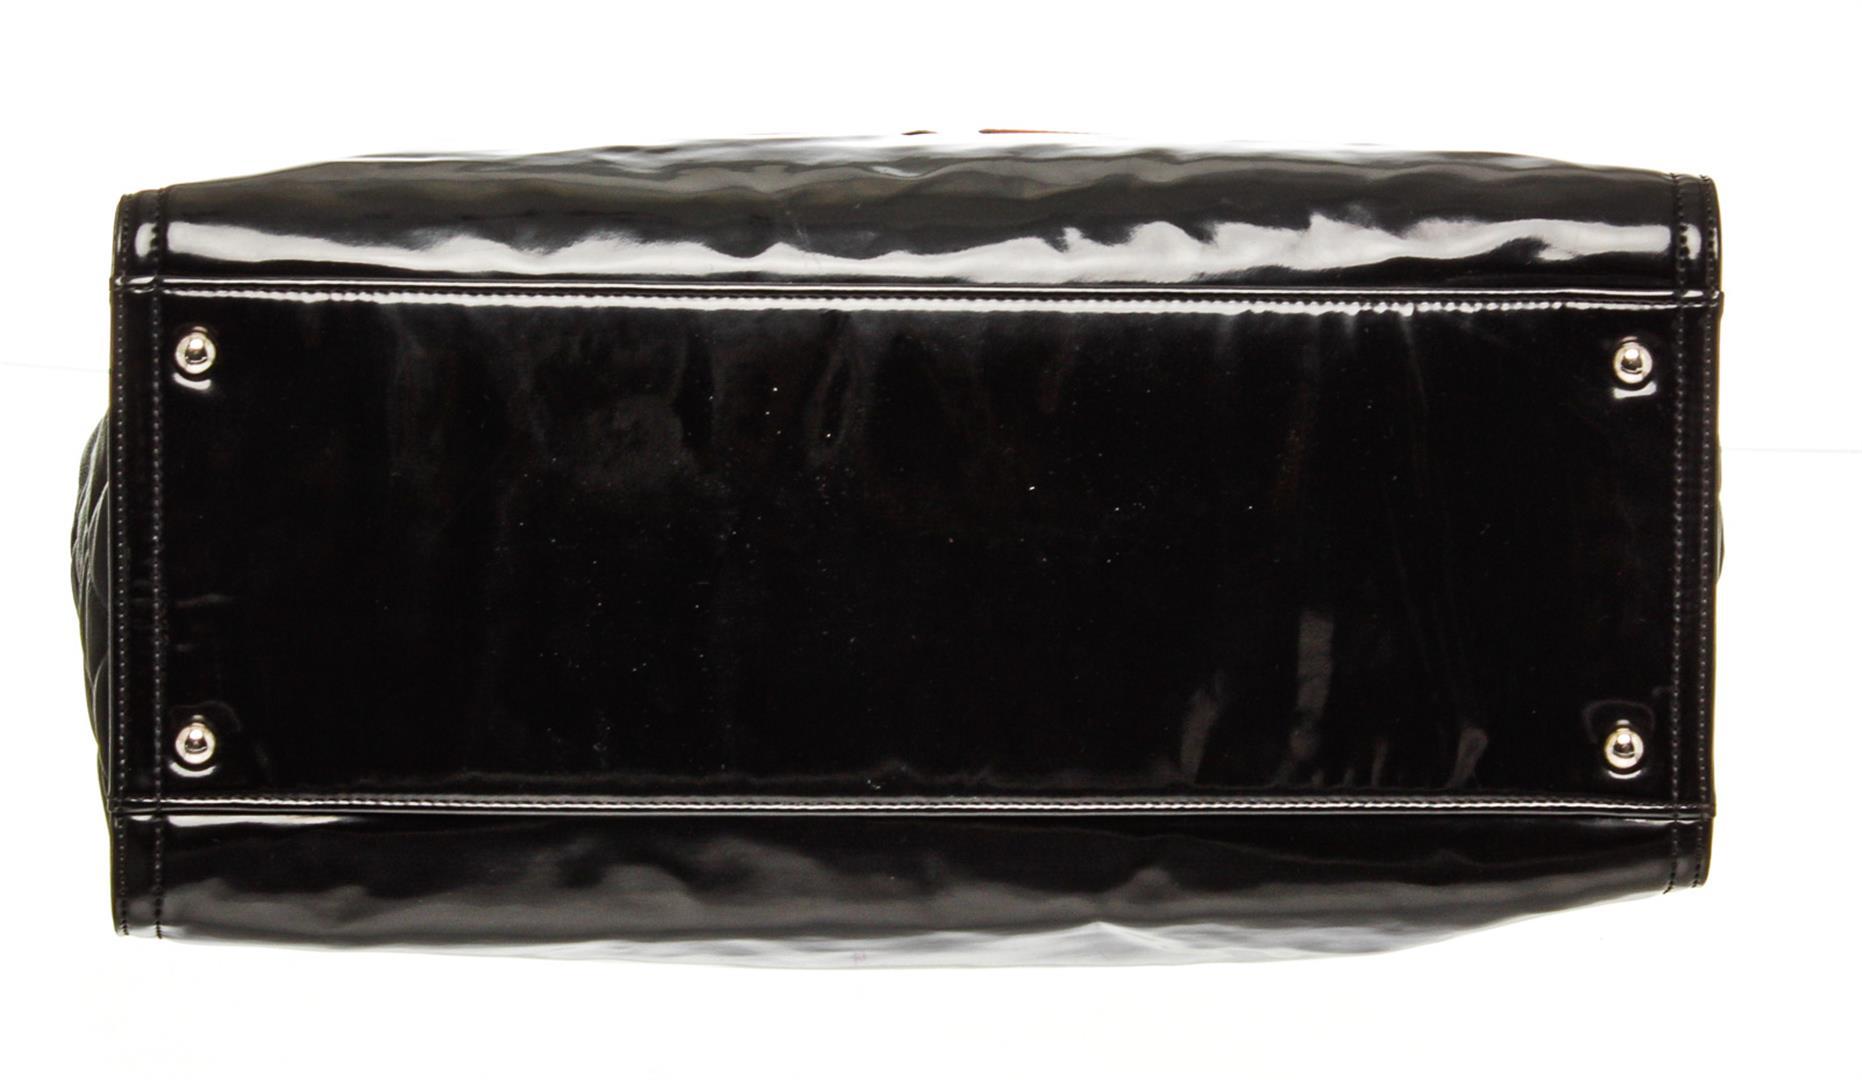 Chanel Black Patent Leather CC Lipstick Tote Bag